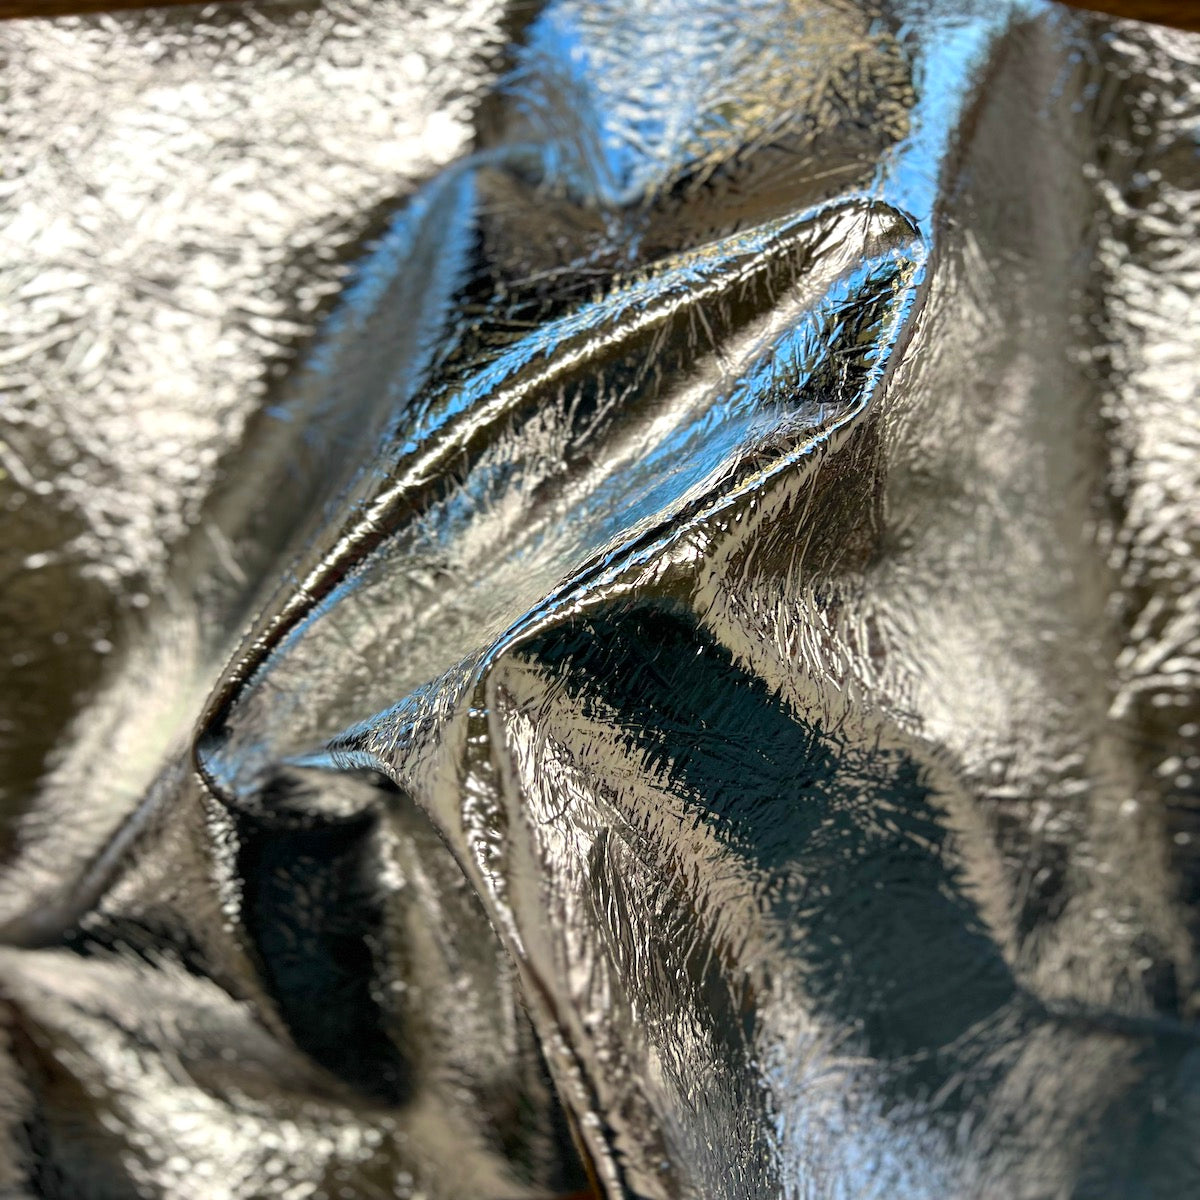 Tela reflexiva del vinilo del espejo de Chrome de la hoja apenada machacada de plata 